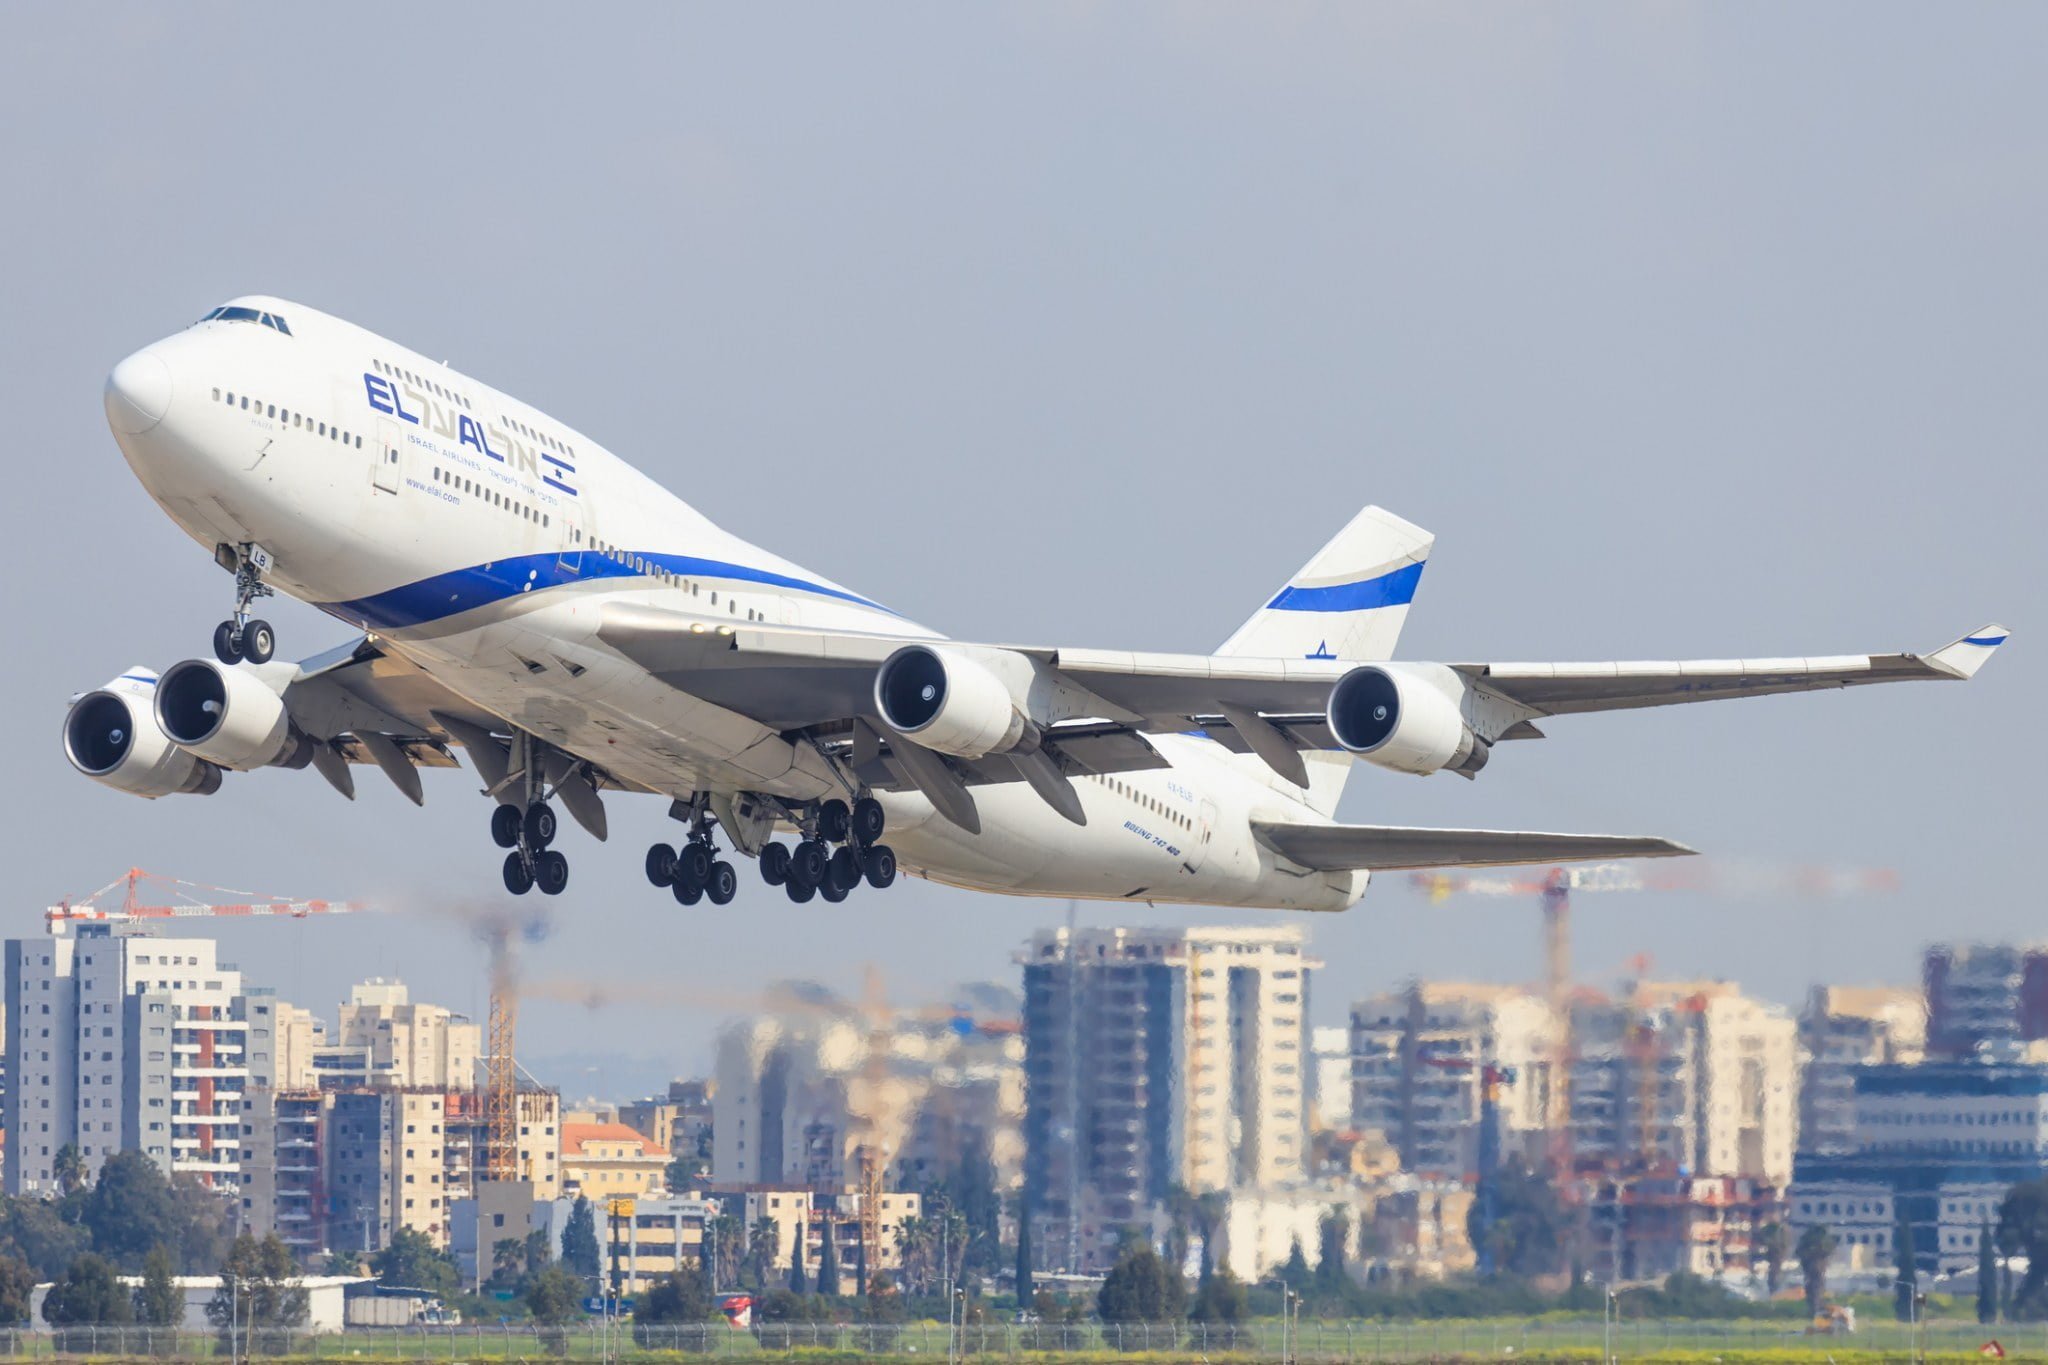 El al israel. Боинг 747 el al. 747 В Эль Аль. Израильские авиалинии Боинг 747. Боинг 747 Эль Аль фото.